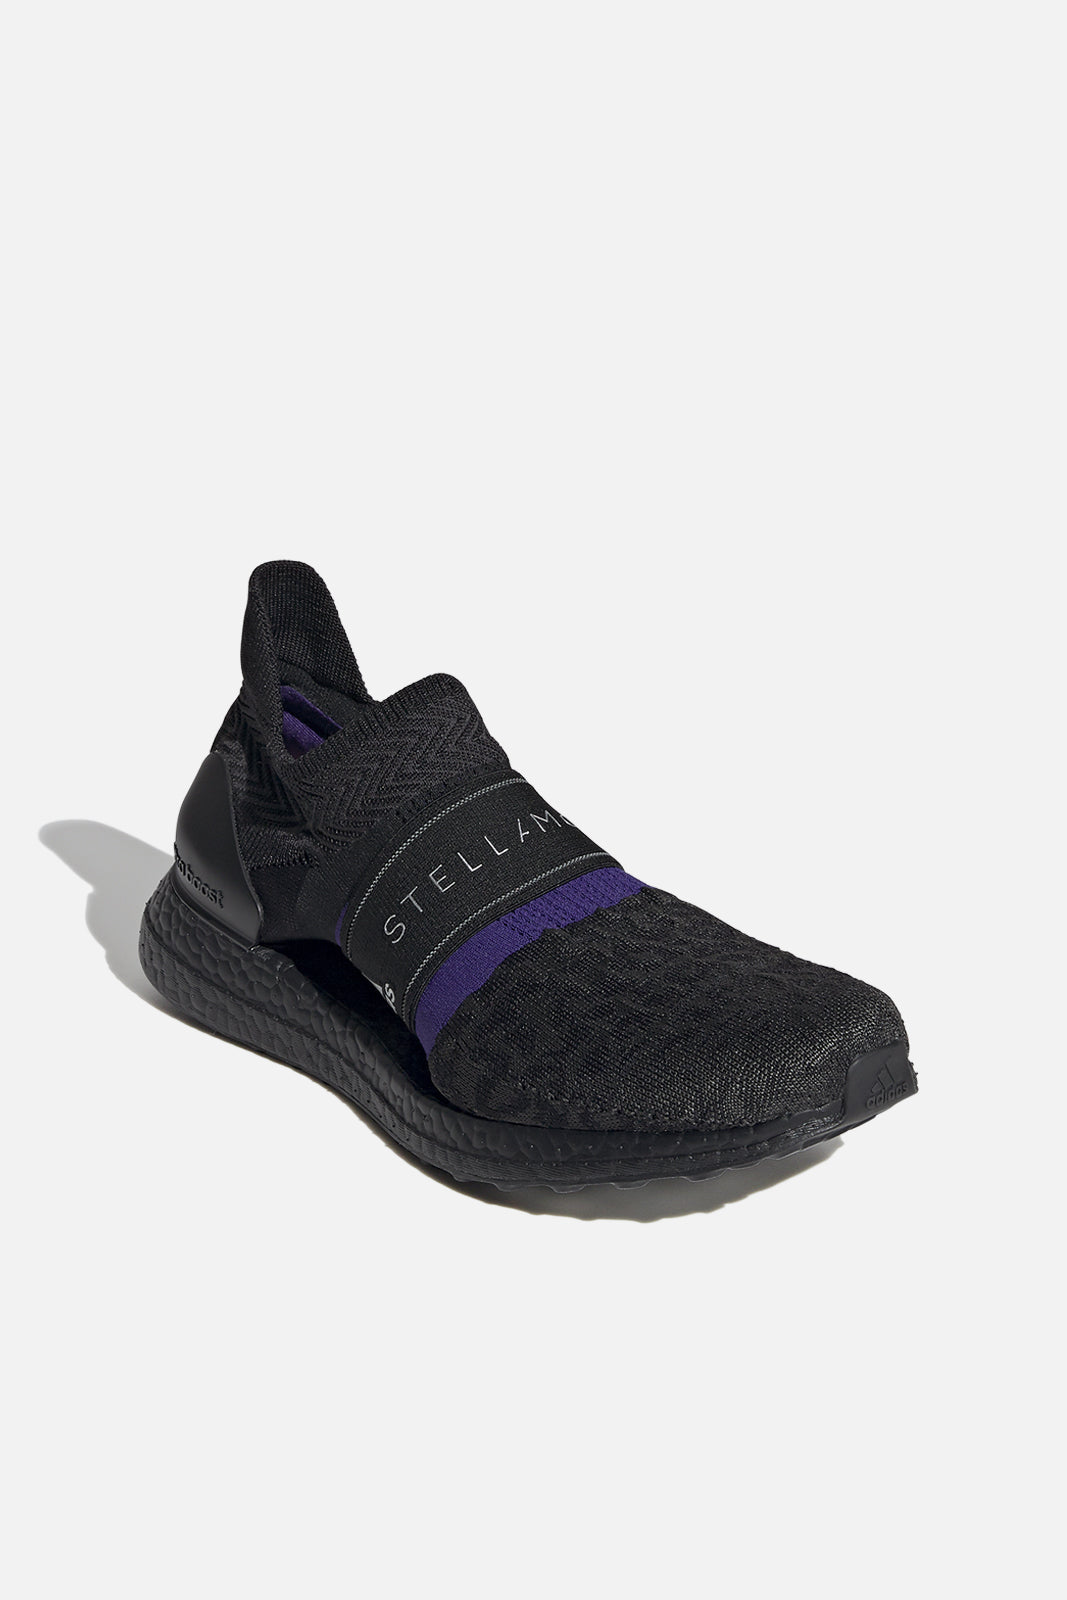 ultraboost x 3d knit shoes